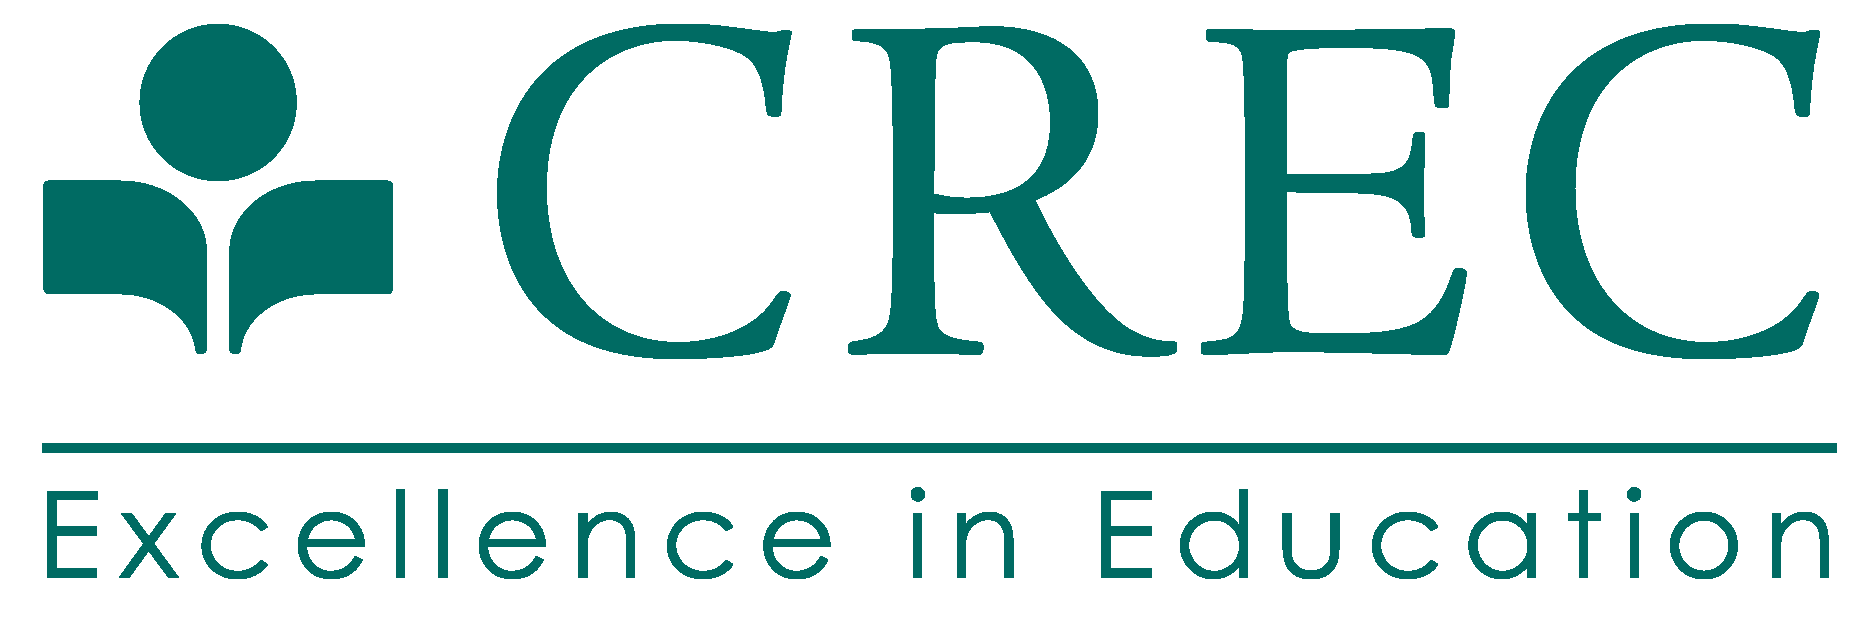 CREC Logo